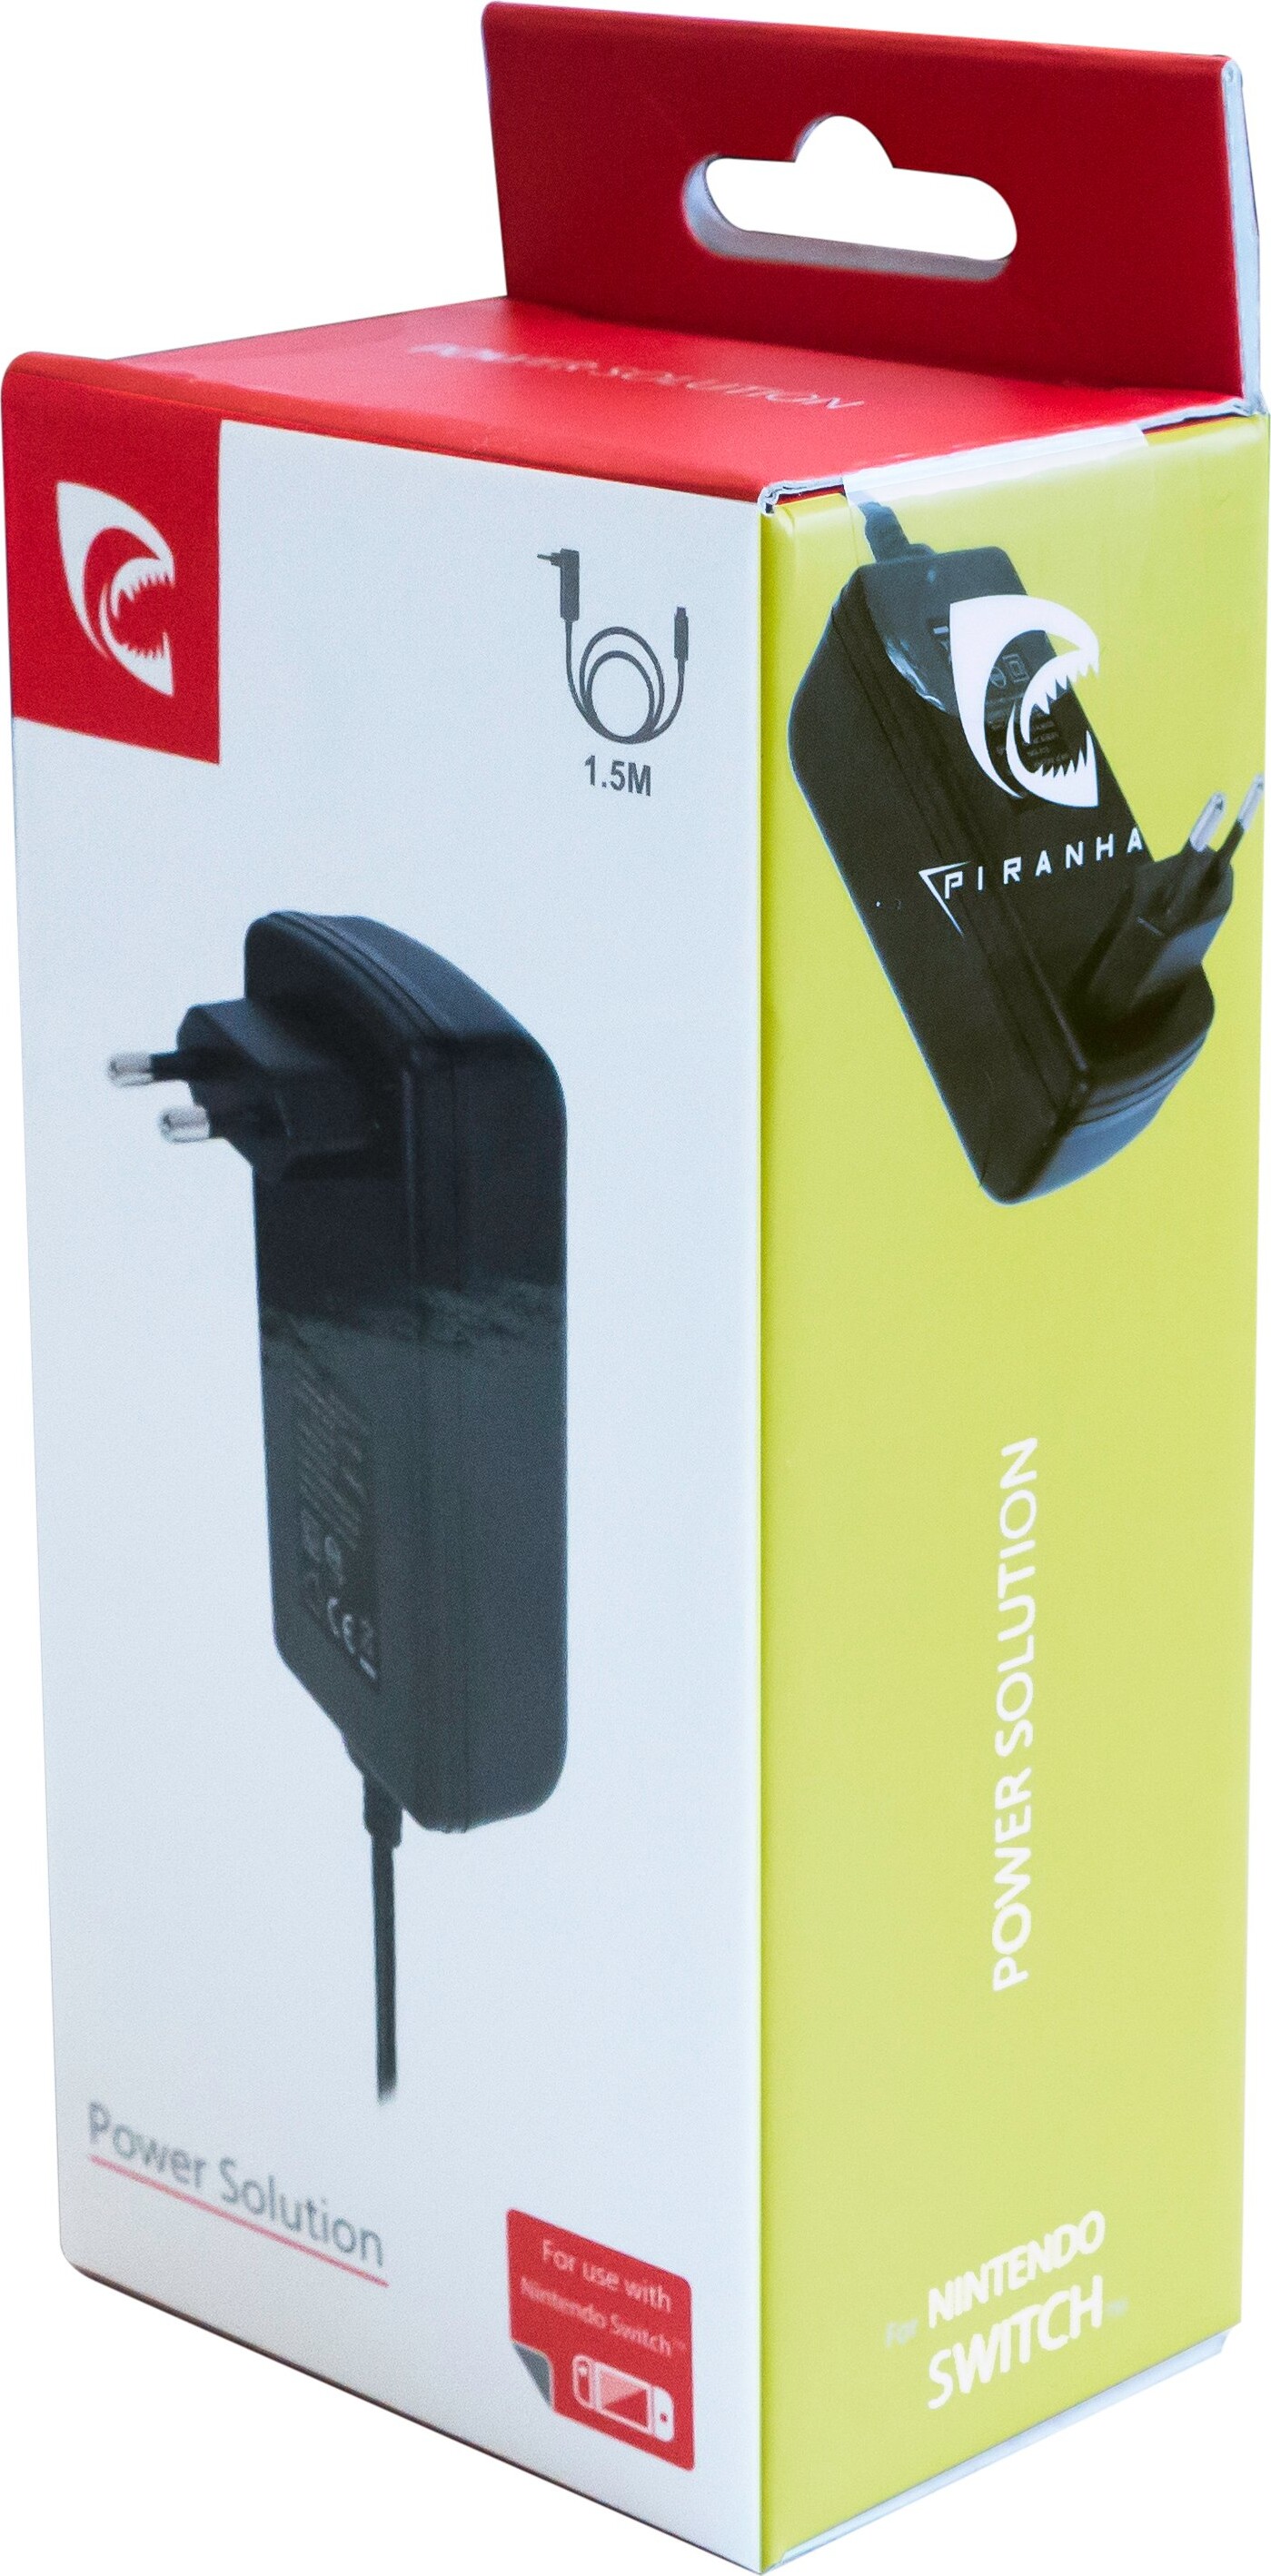 Piranha Nintendo Switch Power Solution - Hurtig Oplader